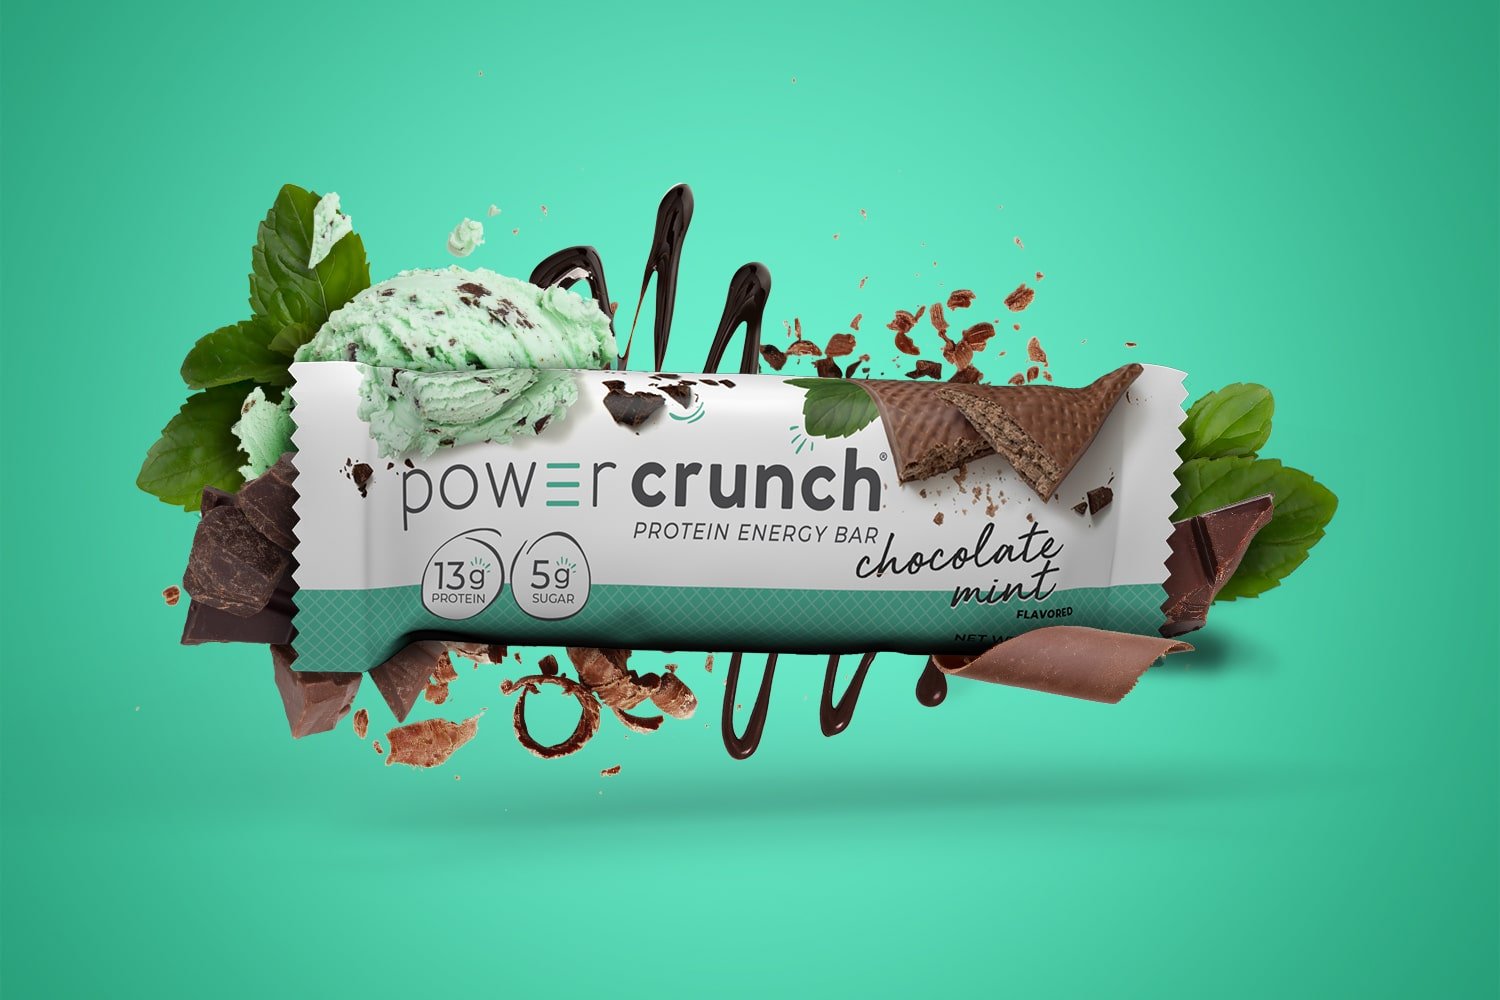 Chocolate Mint - Power CrunchPower Crunch Original